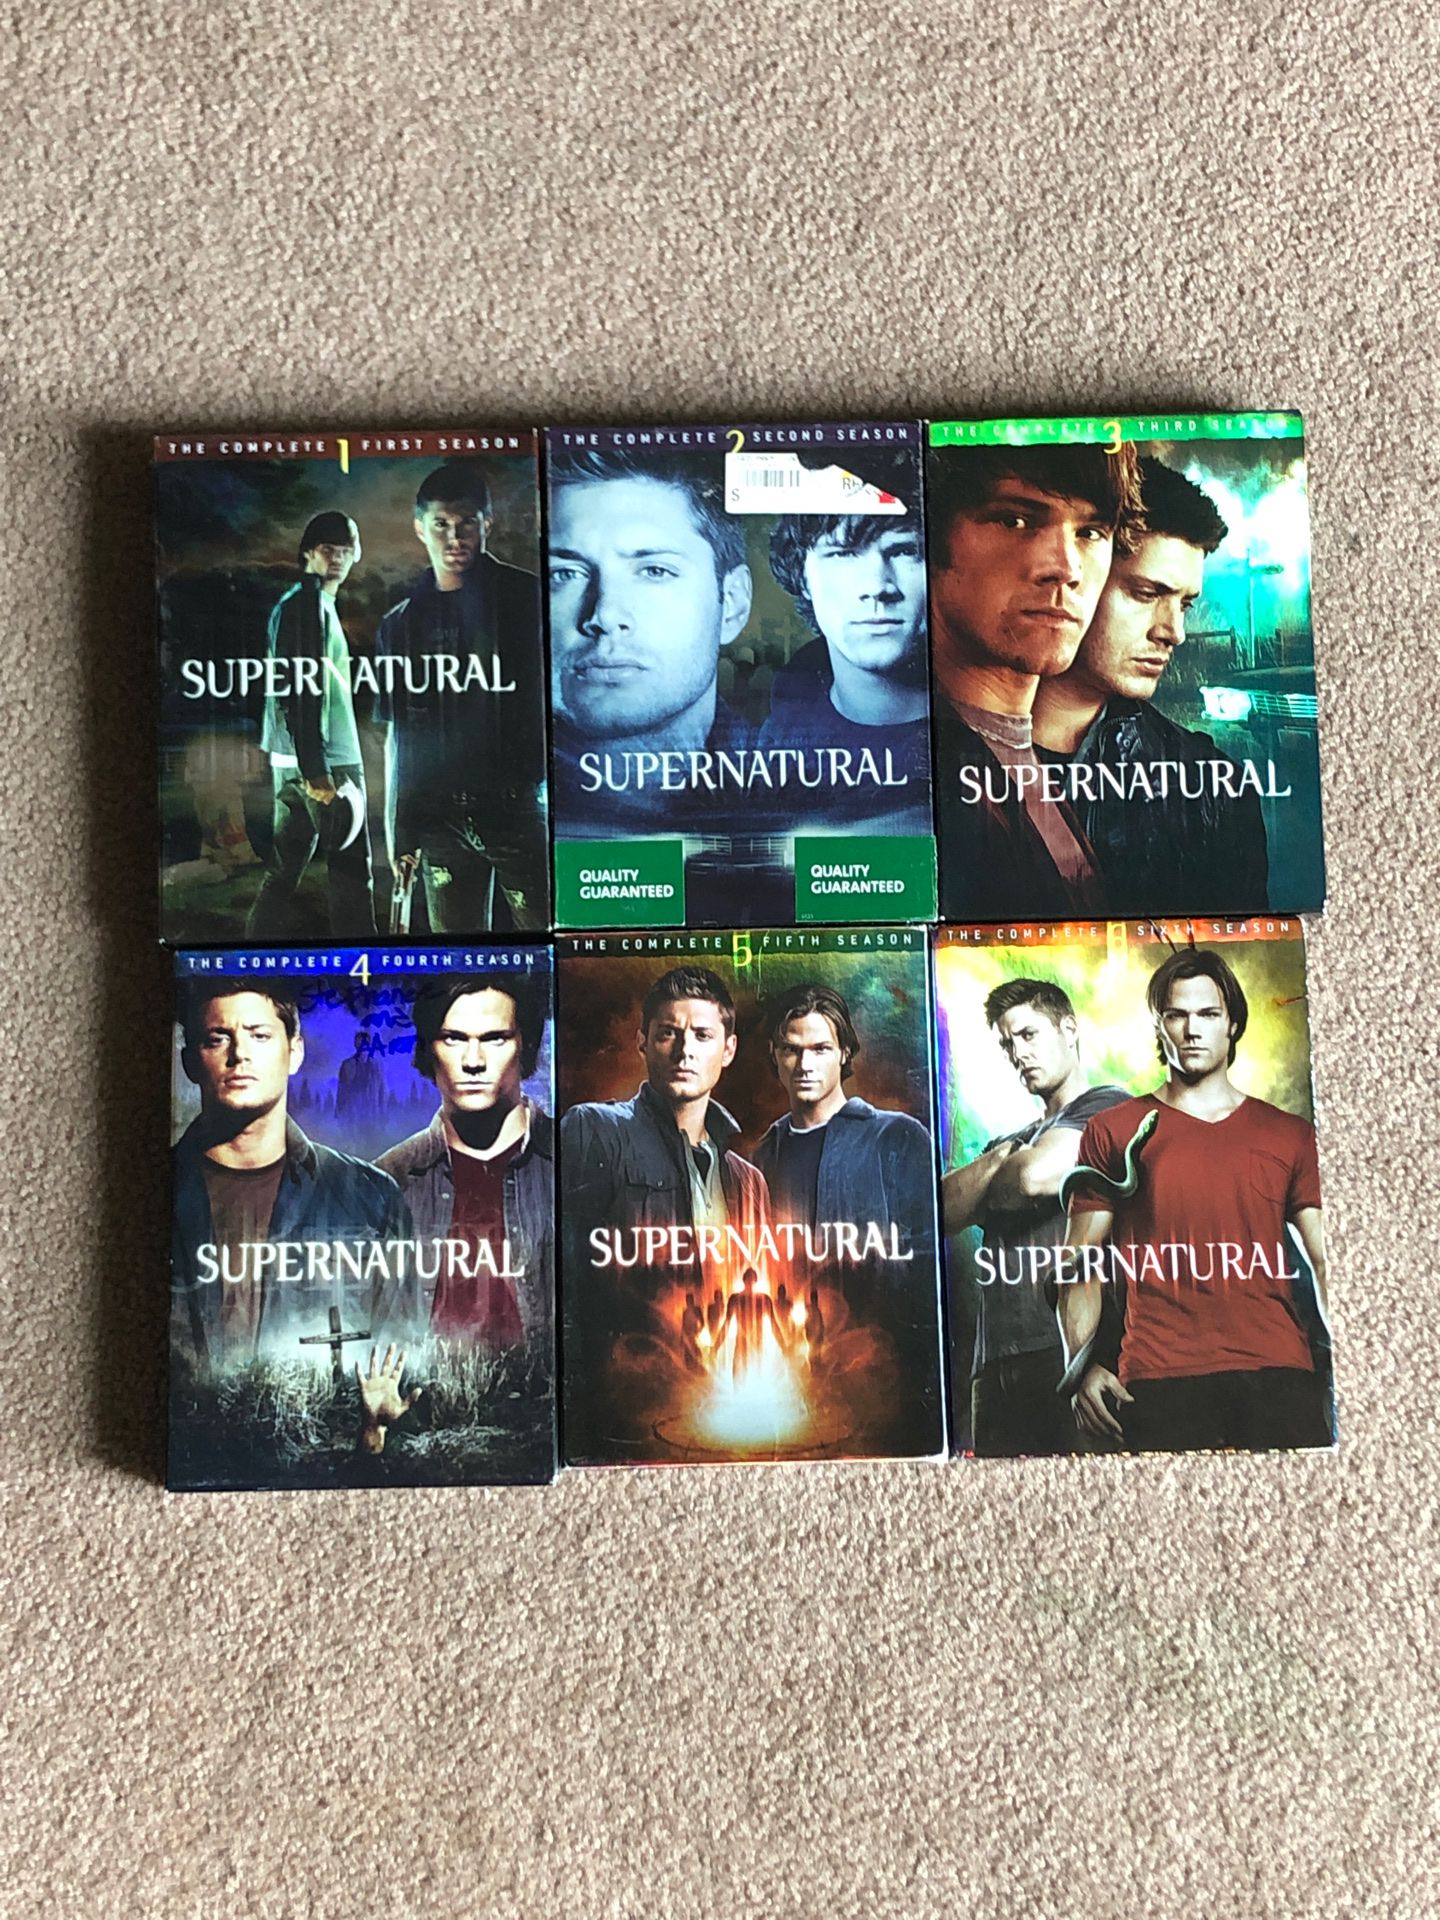 Supernatural DVDs, seasons 1-6